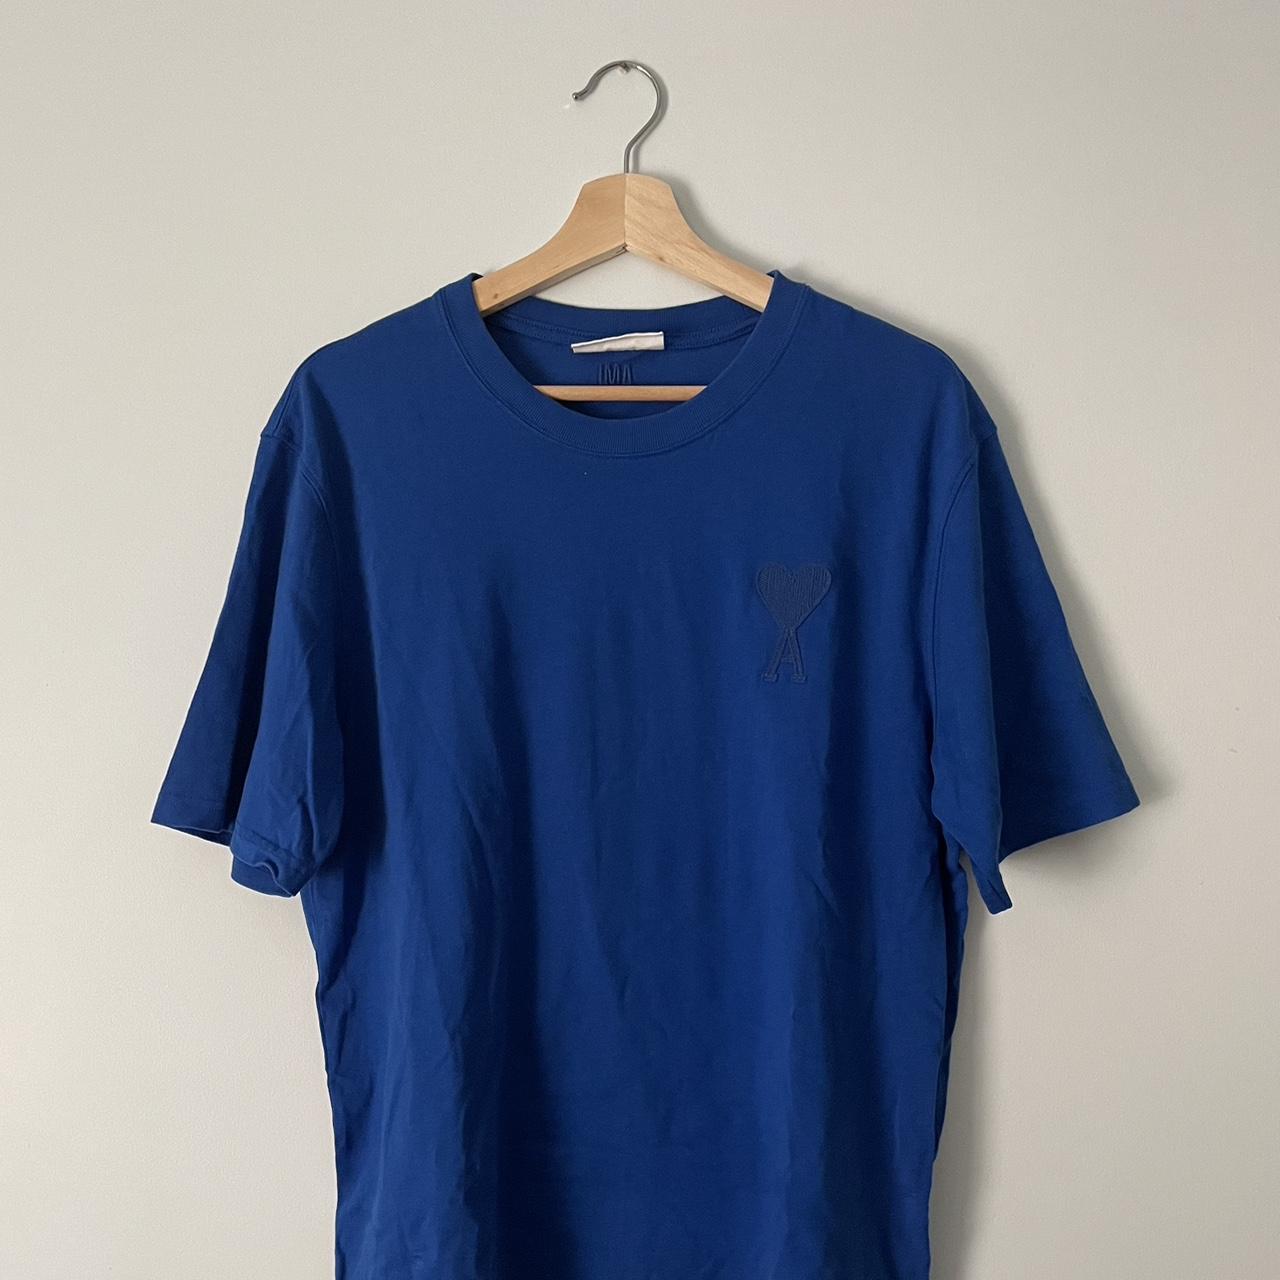 Ami Blue T shirt Worn once - Depop